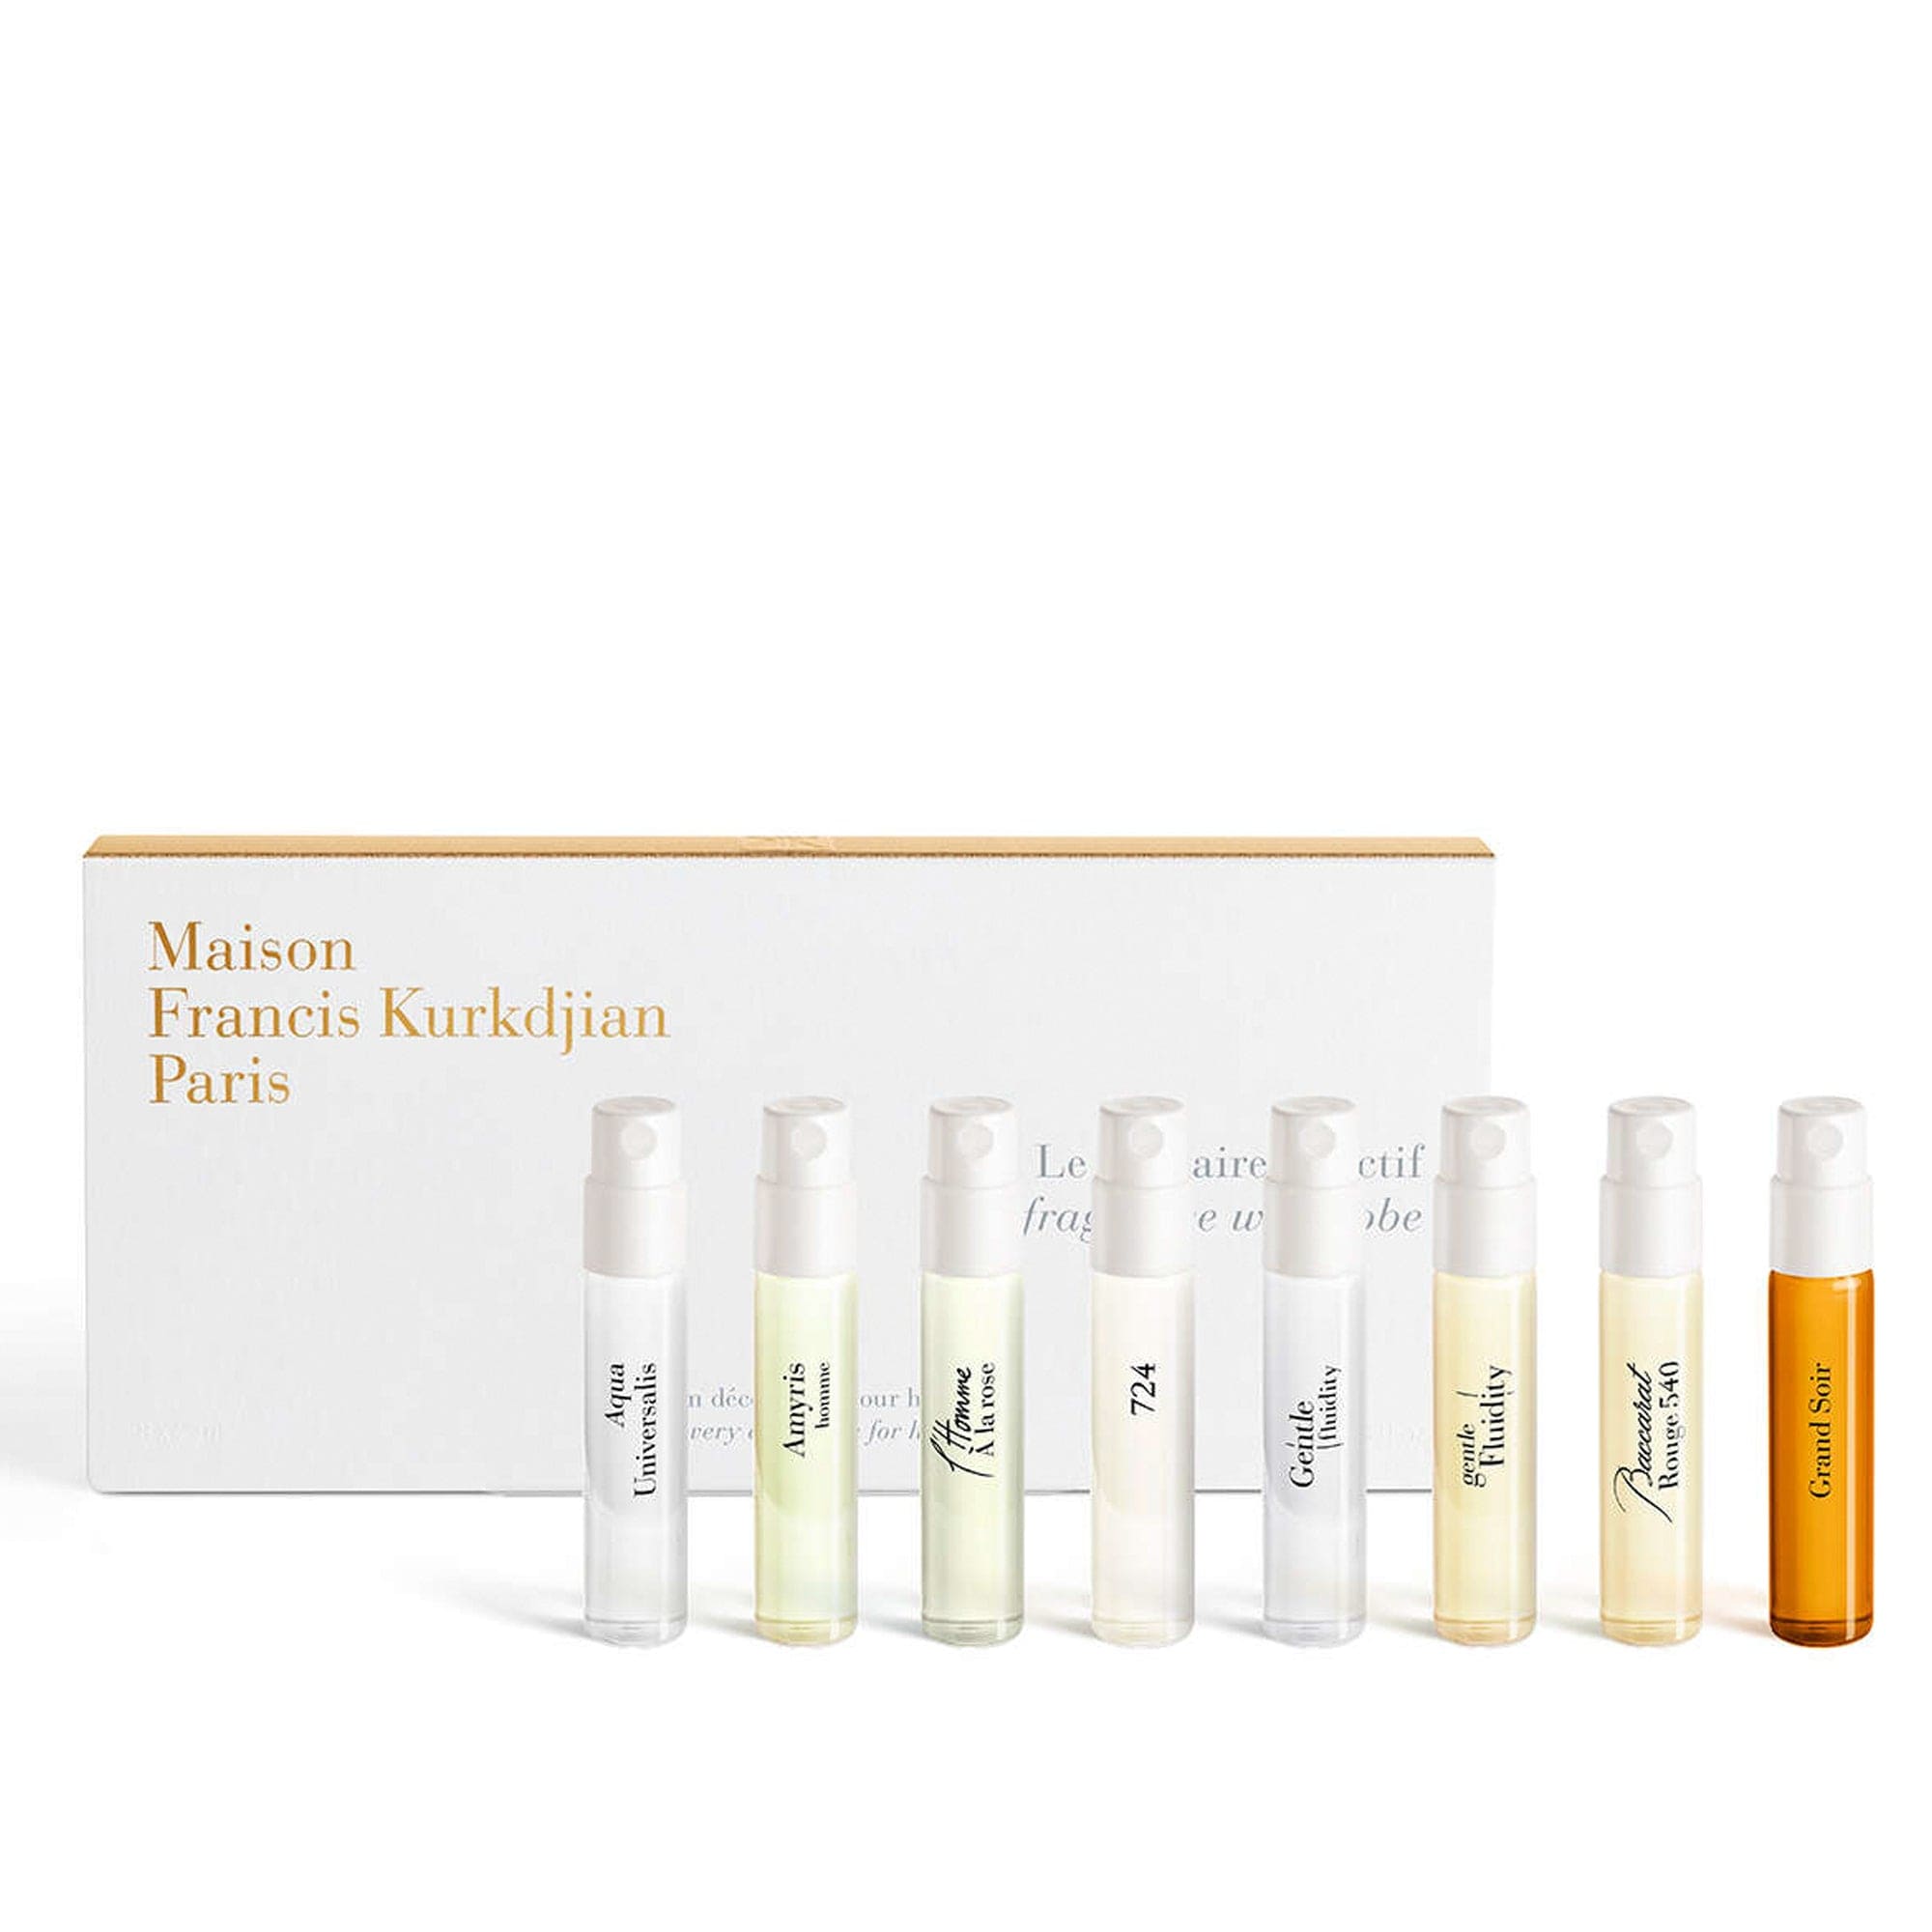 Maison Francis Kurkdjian Men's Fragrance Discovery Pack